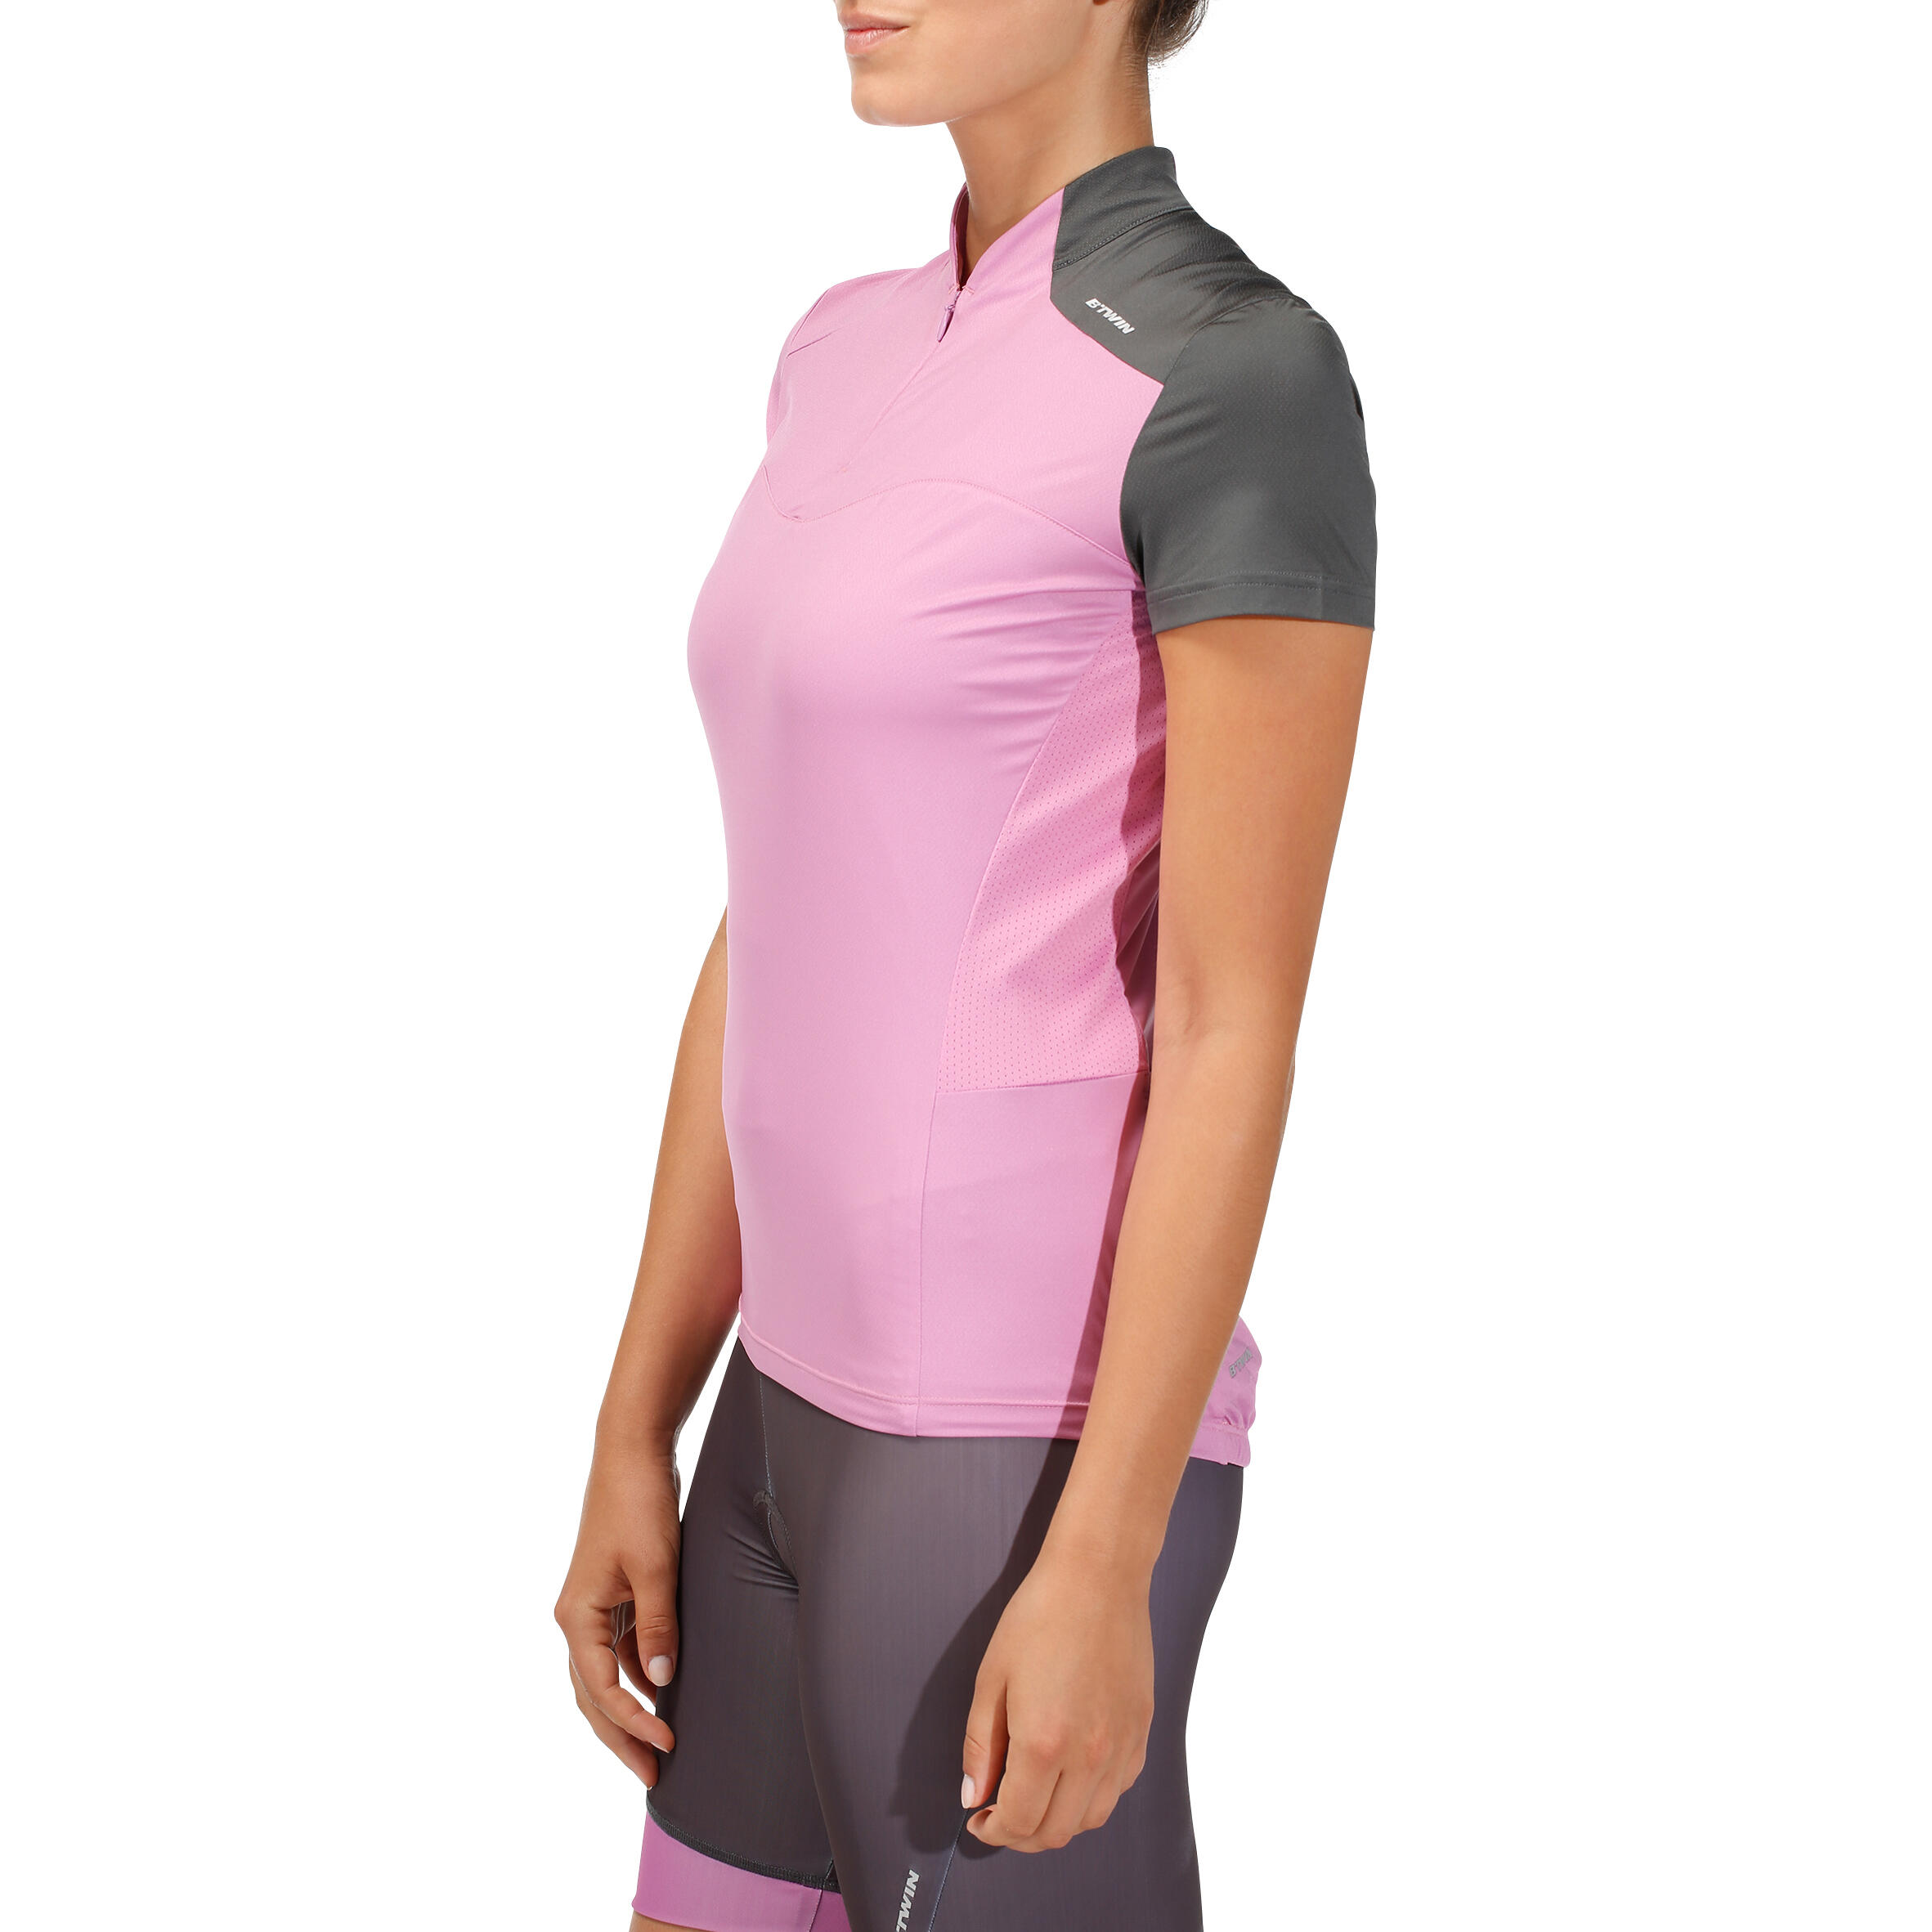 500 Women's Short Sleeve Cycling Jersey - Pink/Grey 4/8